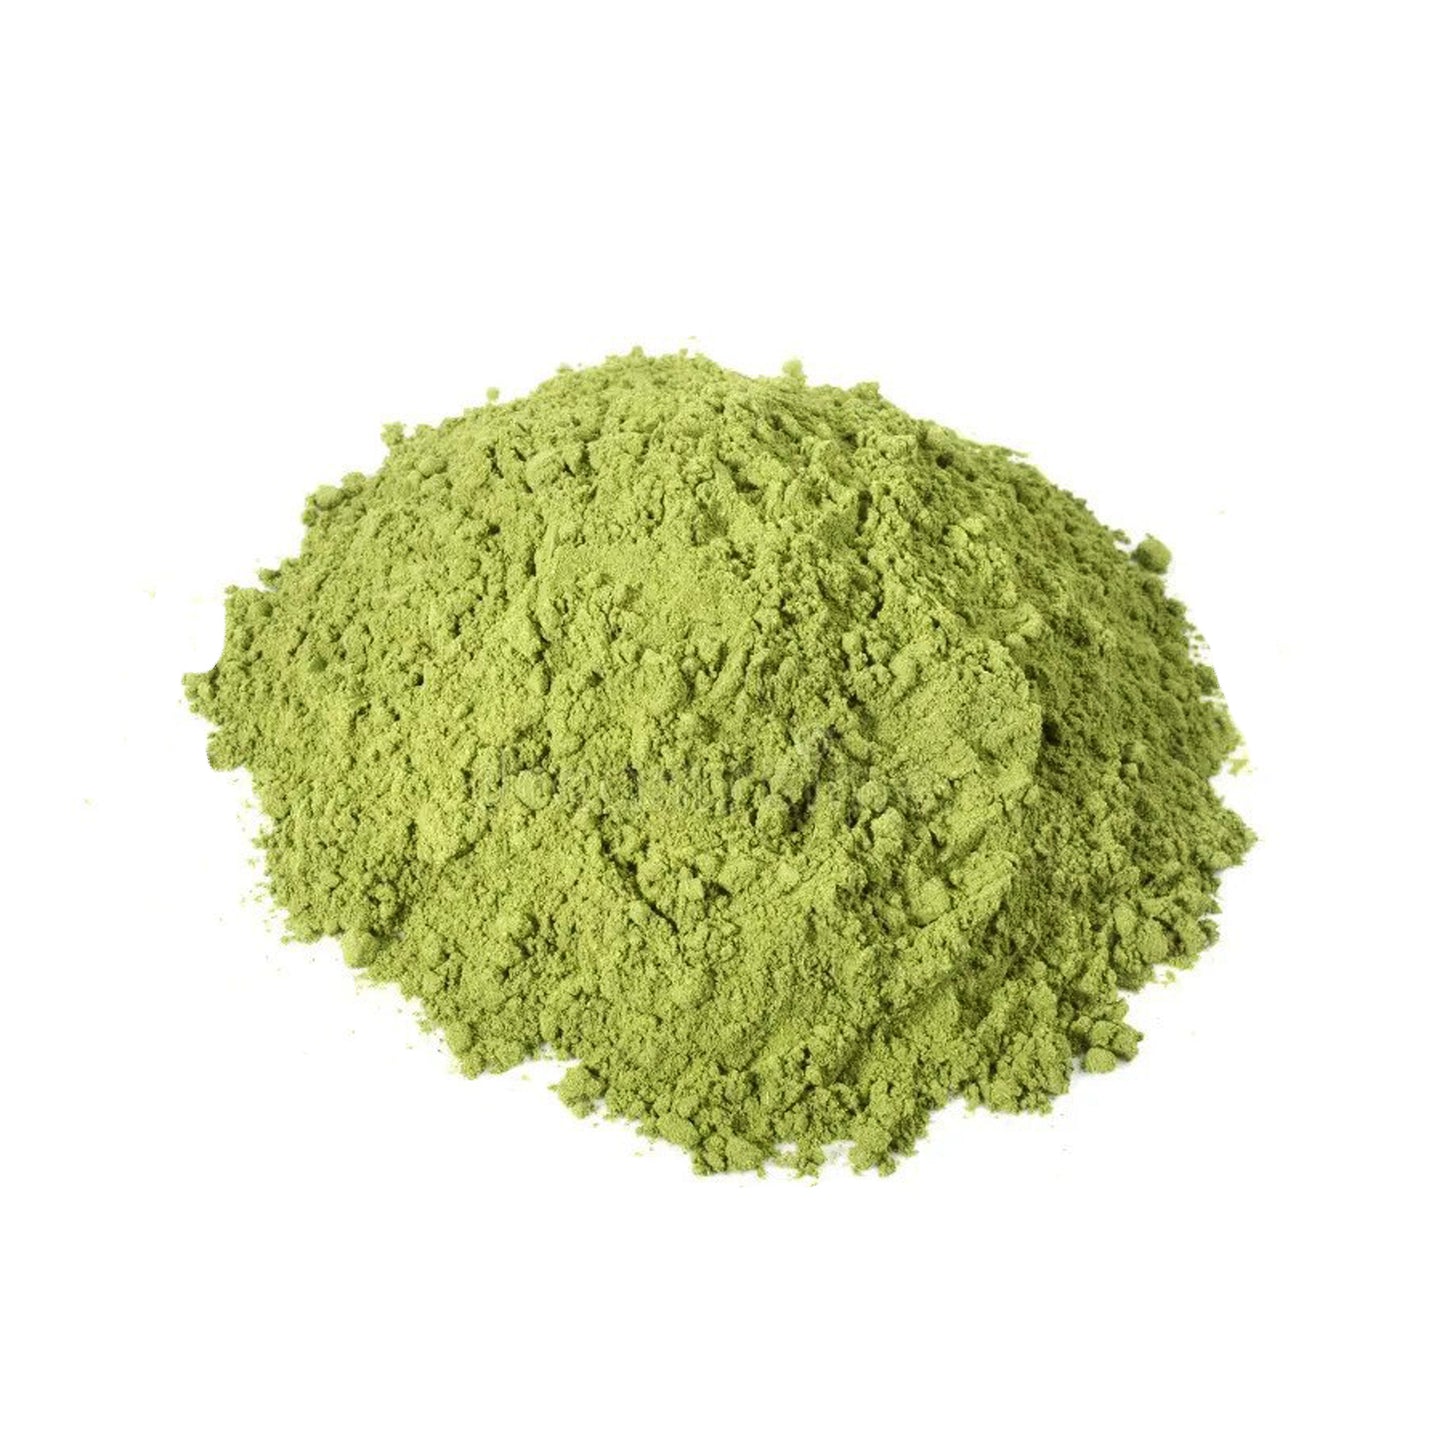 Lakpura Dehydrated Rampe / Pandan Leaves Powder